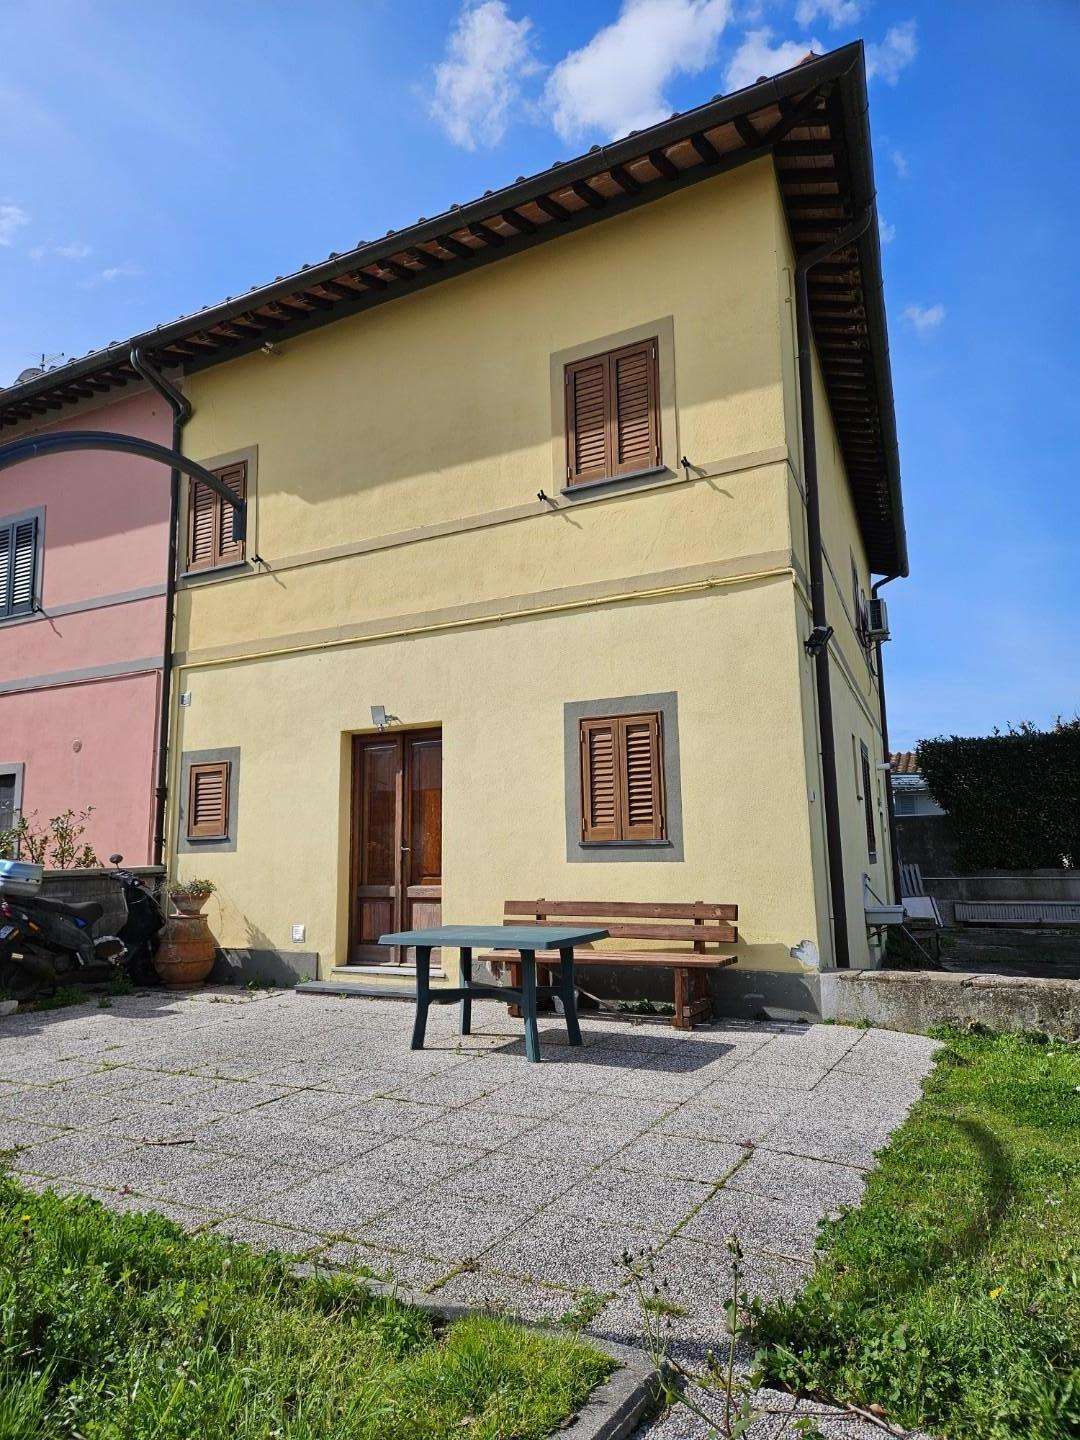 Palazzo - Stabile in Vendita a Cascina Località Motta Gastaldi,